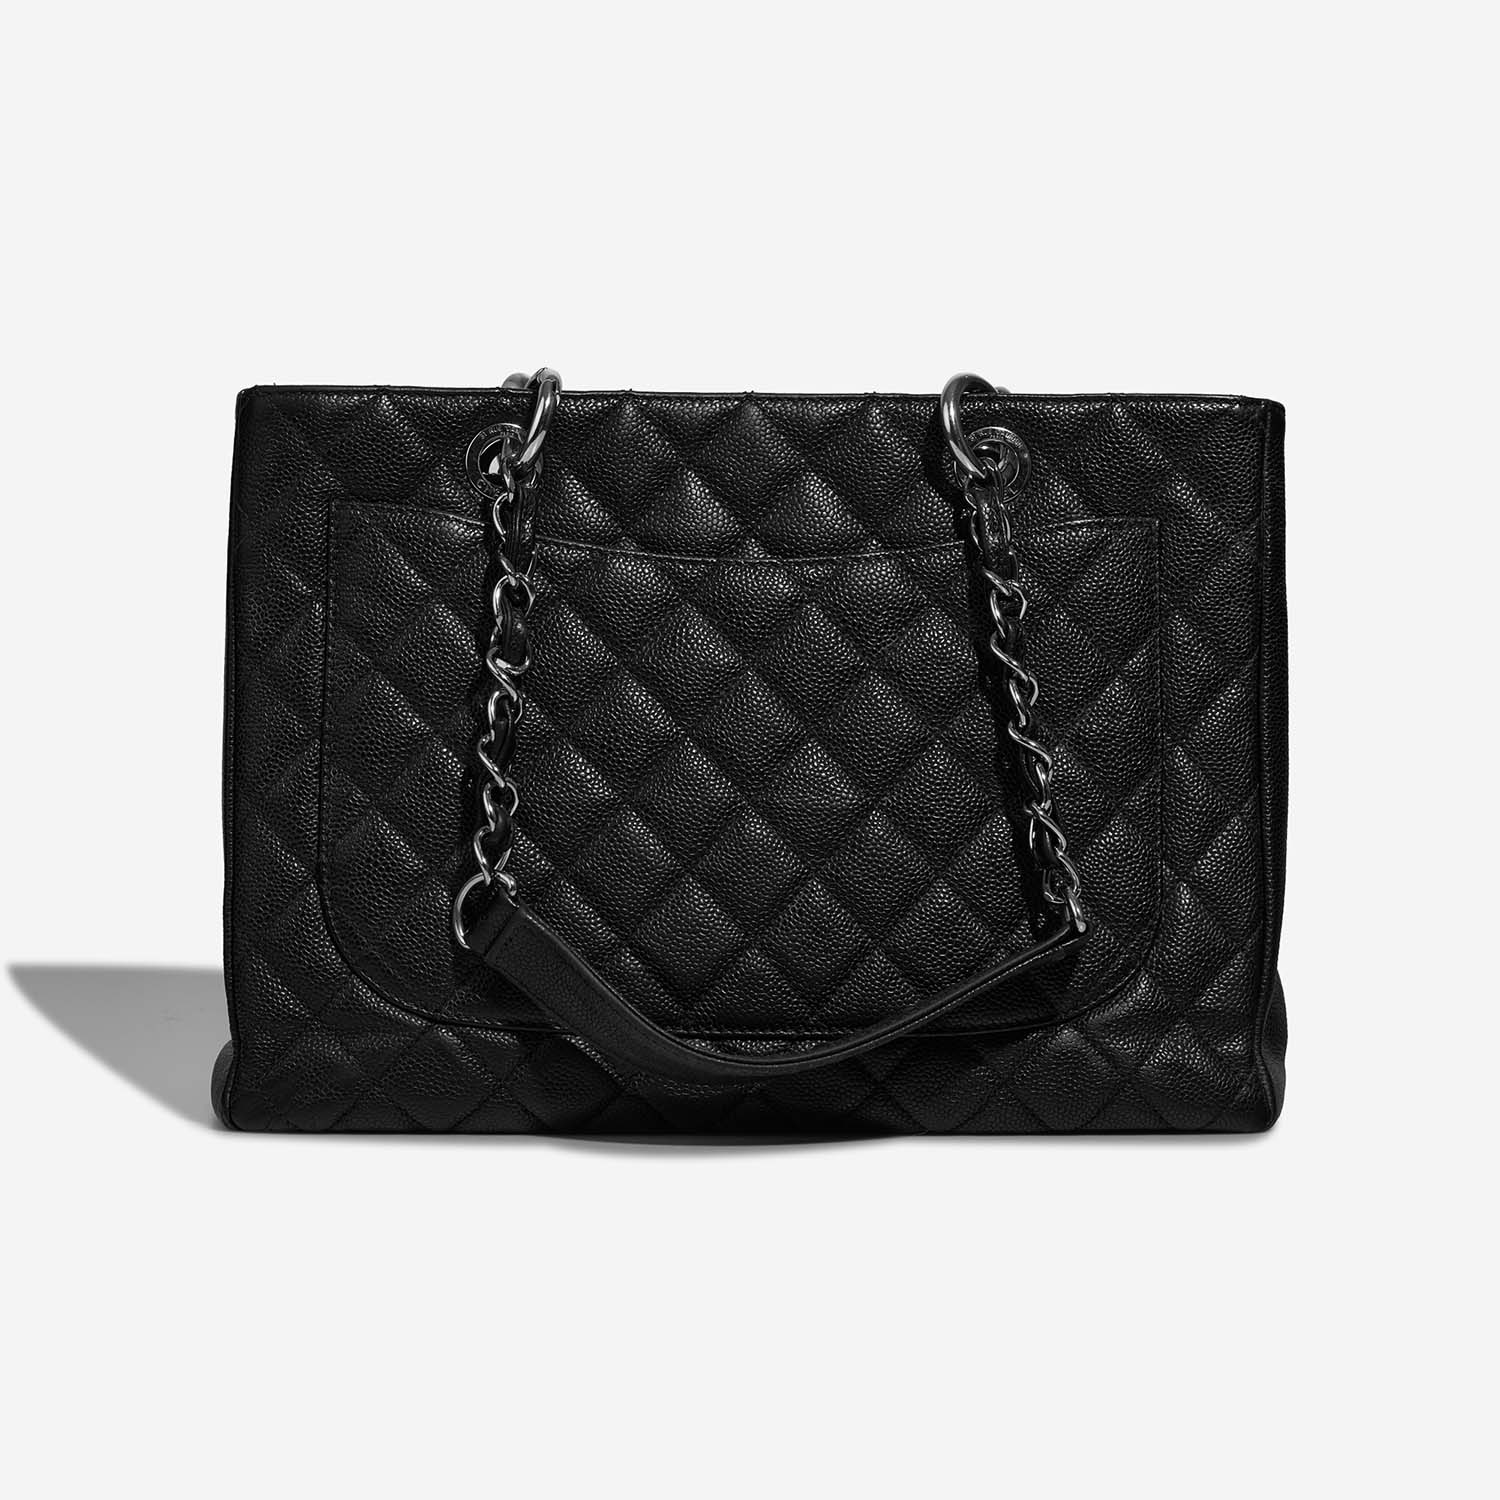 Chanel ShoppingTote Grande Back | Sell your designer bag on Saclab.com